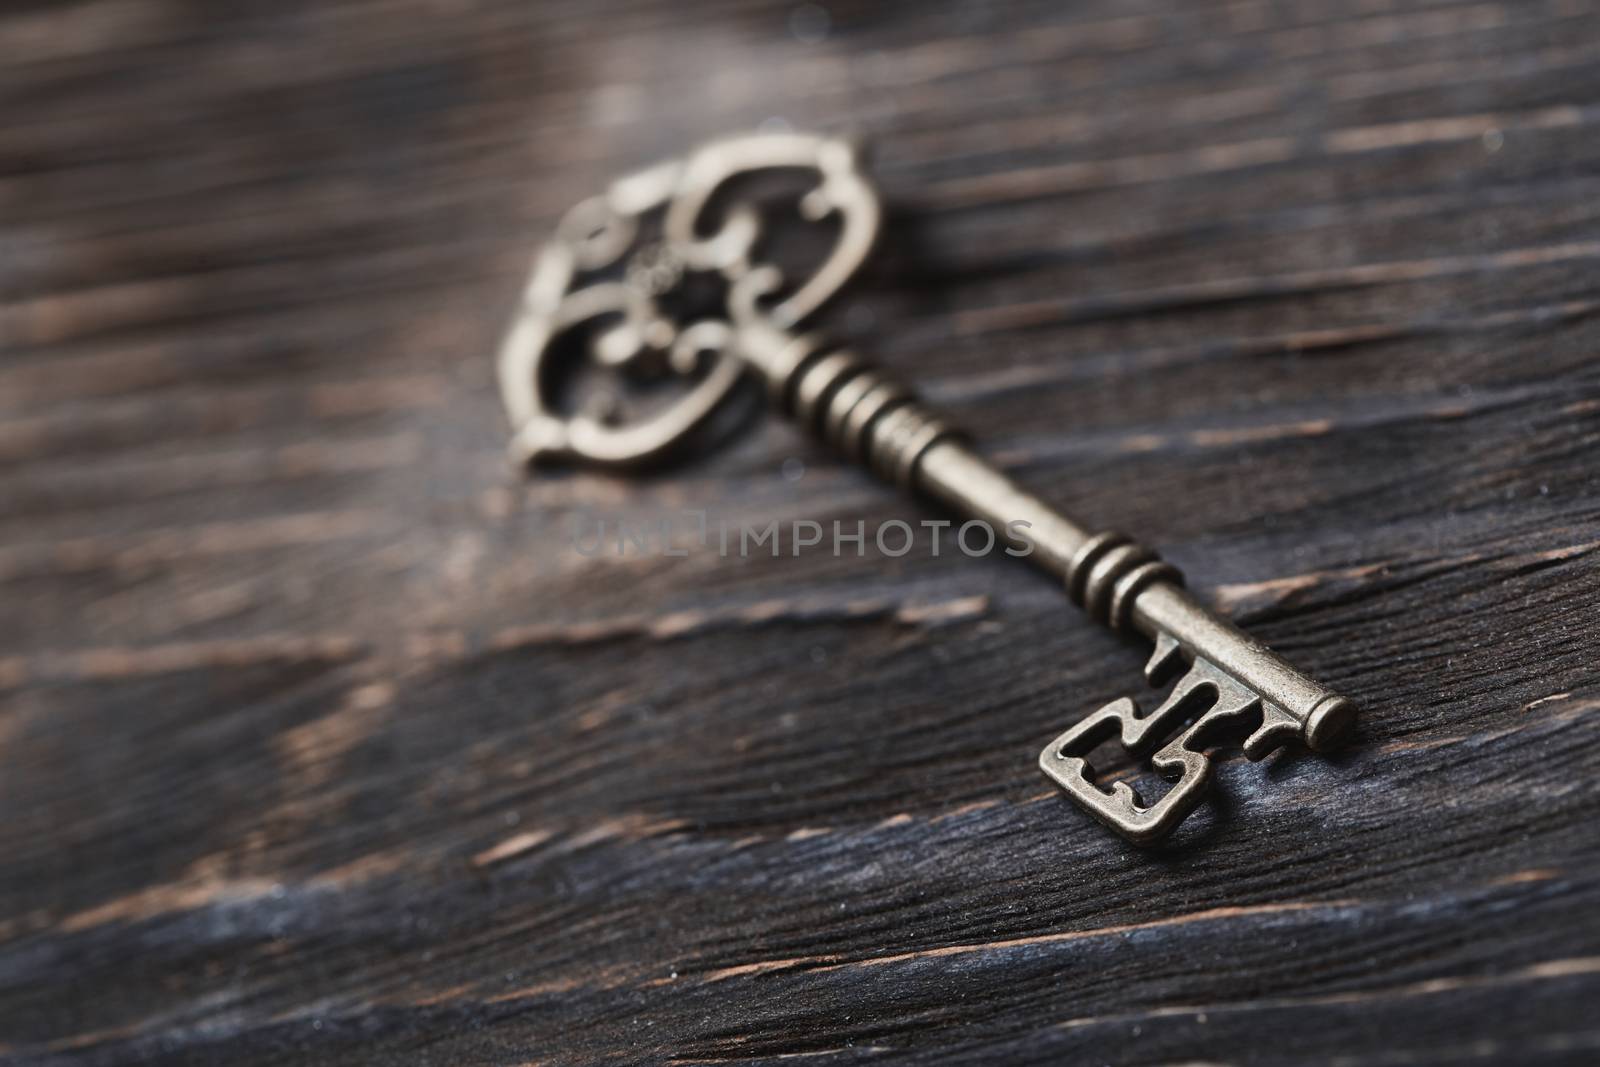 Vintage skeleton key on a table. Close-up